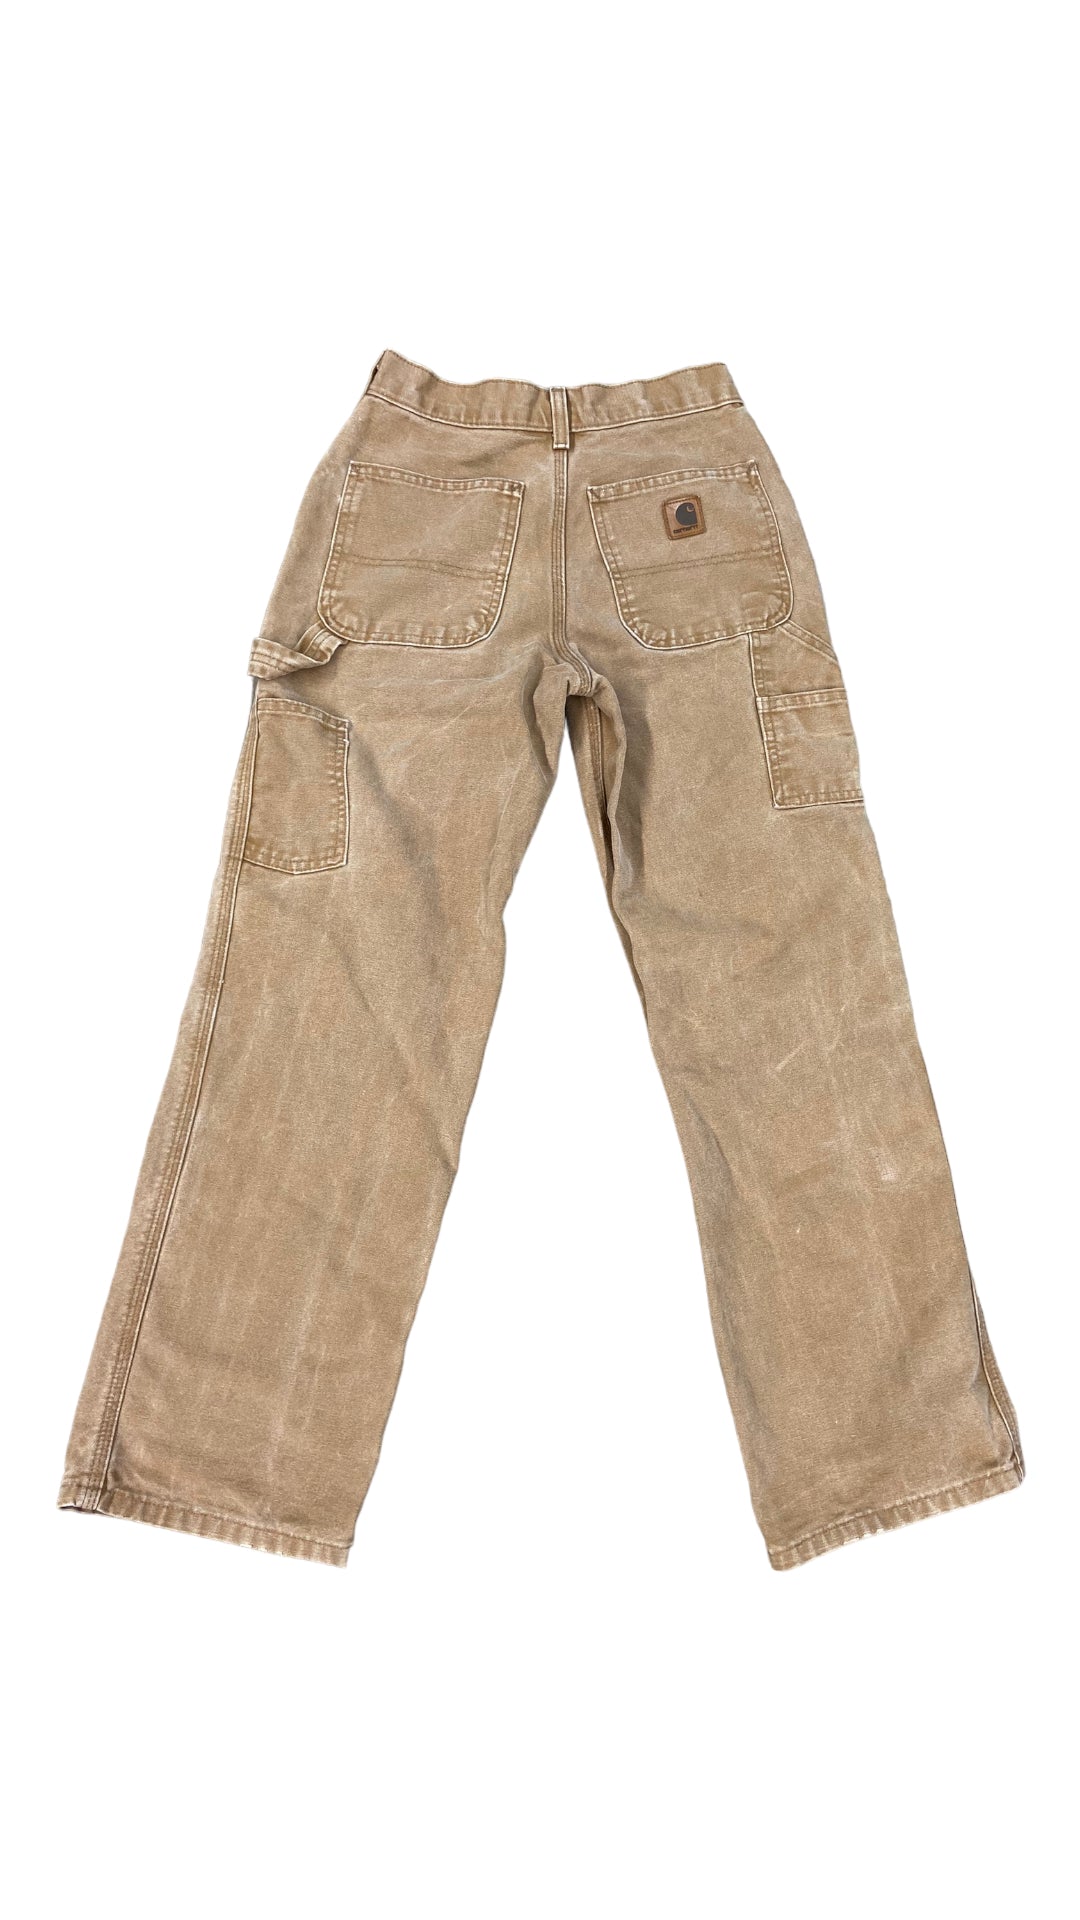 VTG Wmn's Tan Carhartt Workwear Pants Sz 24